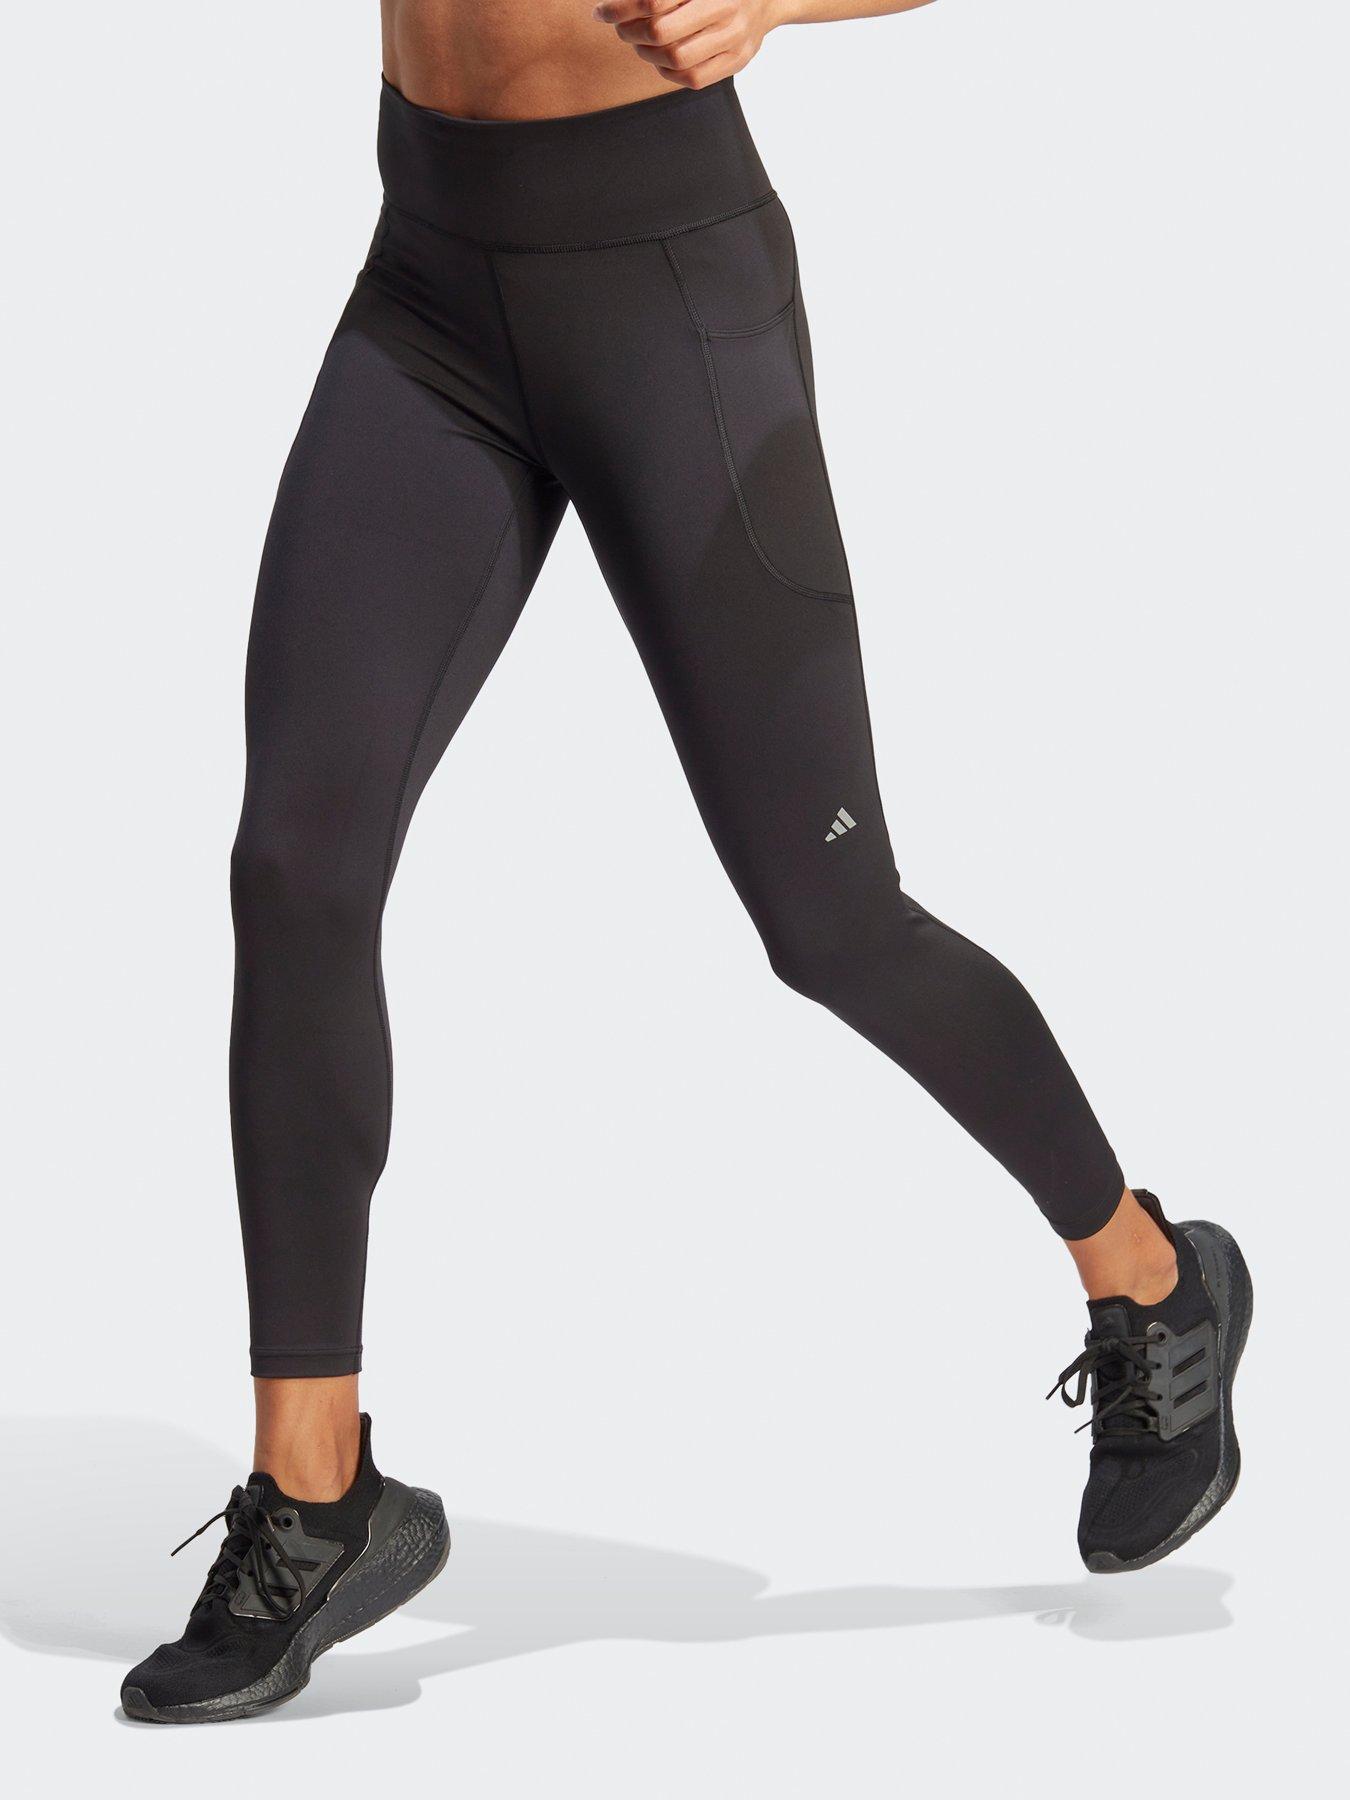 Adidas Climalite Black High Rise Leggings Mesh Panel Women's Size Large  Athletic